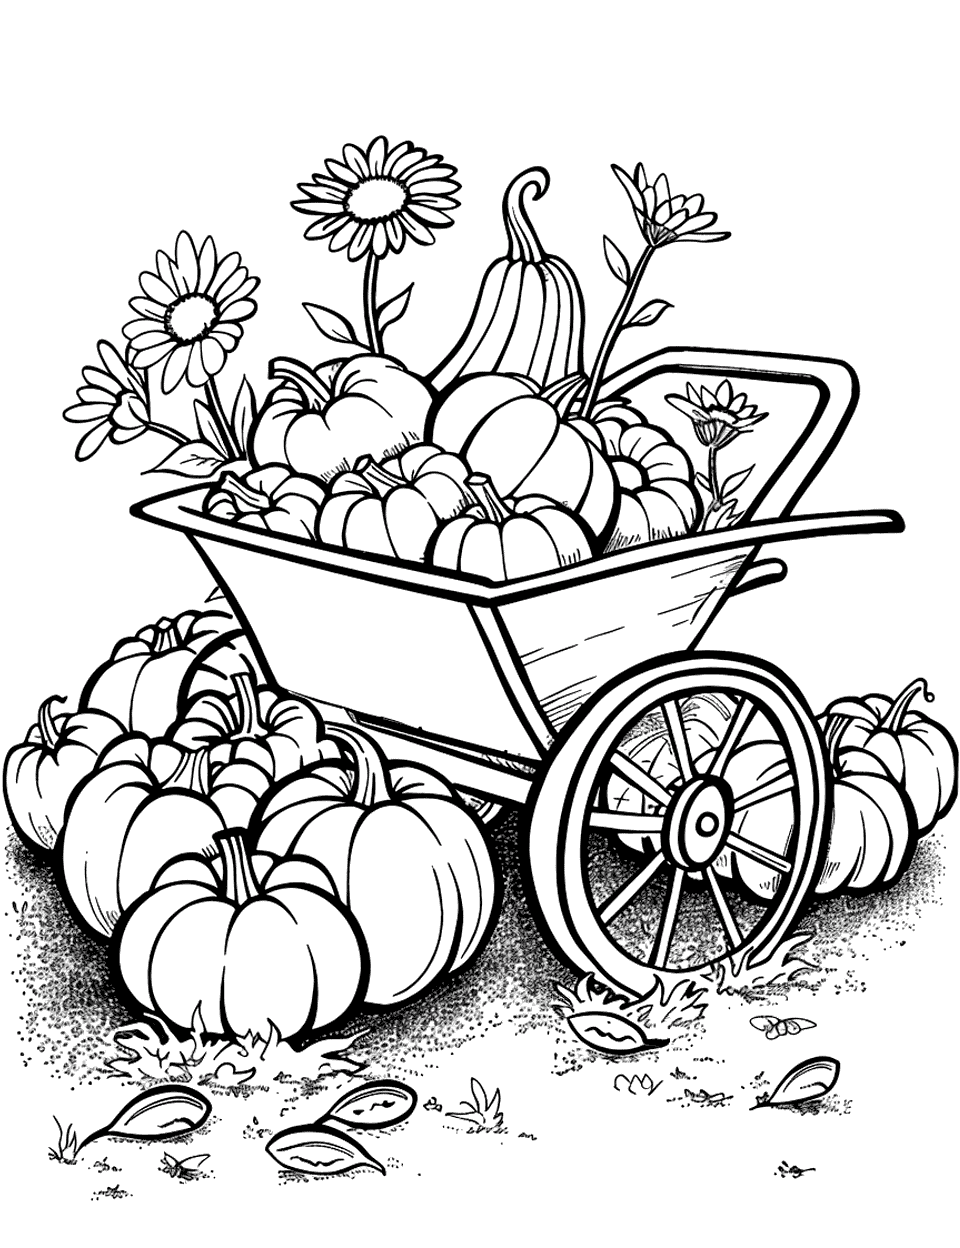 Fall Harvest Garden Coloring Page - A wheelbarrow full of pumpkins and gourds in a garden during the autumn season.